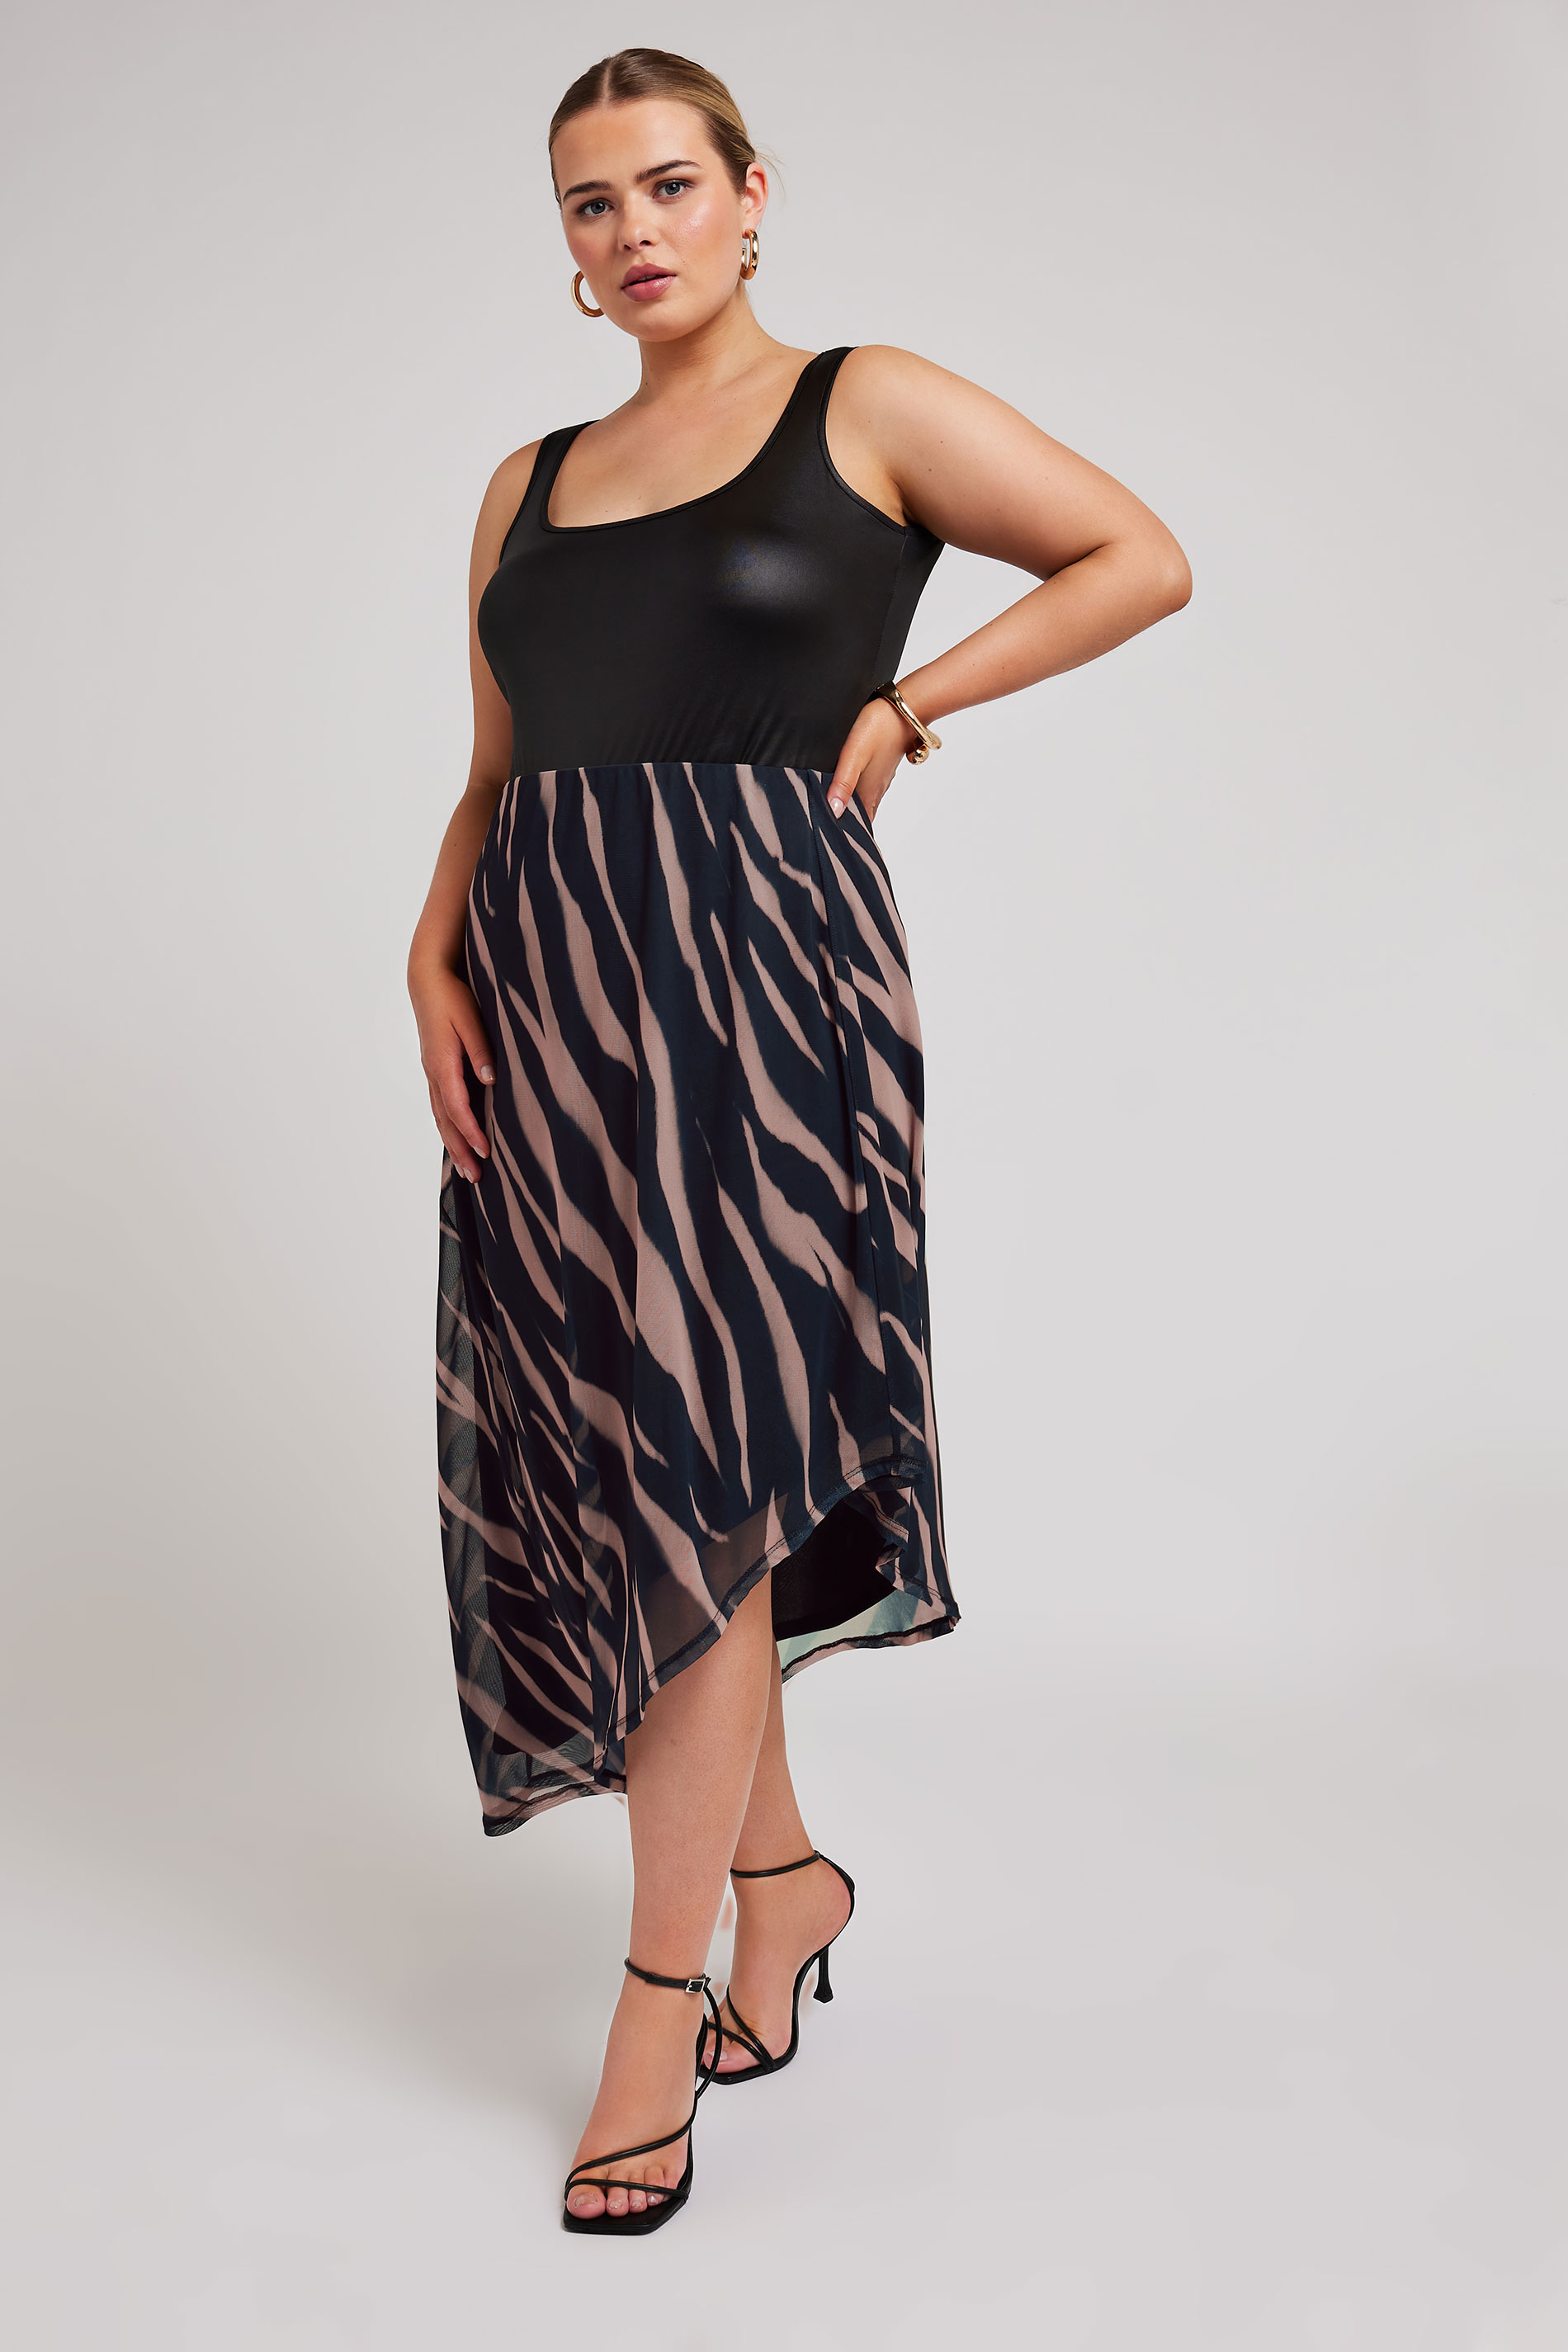 YOURS LONDON Plus Size Black Zebra Print Asymmetric Mesh Skirt | Yours Clothing 2